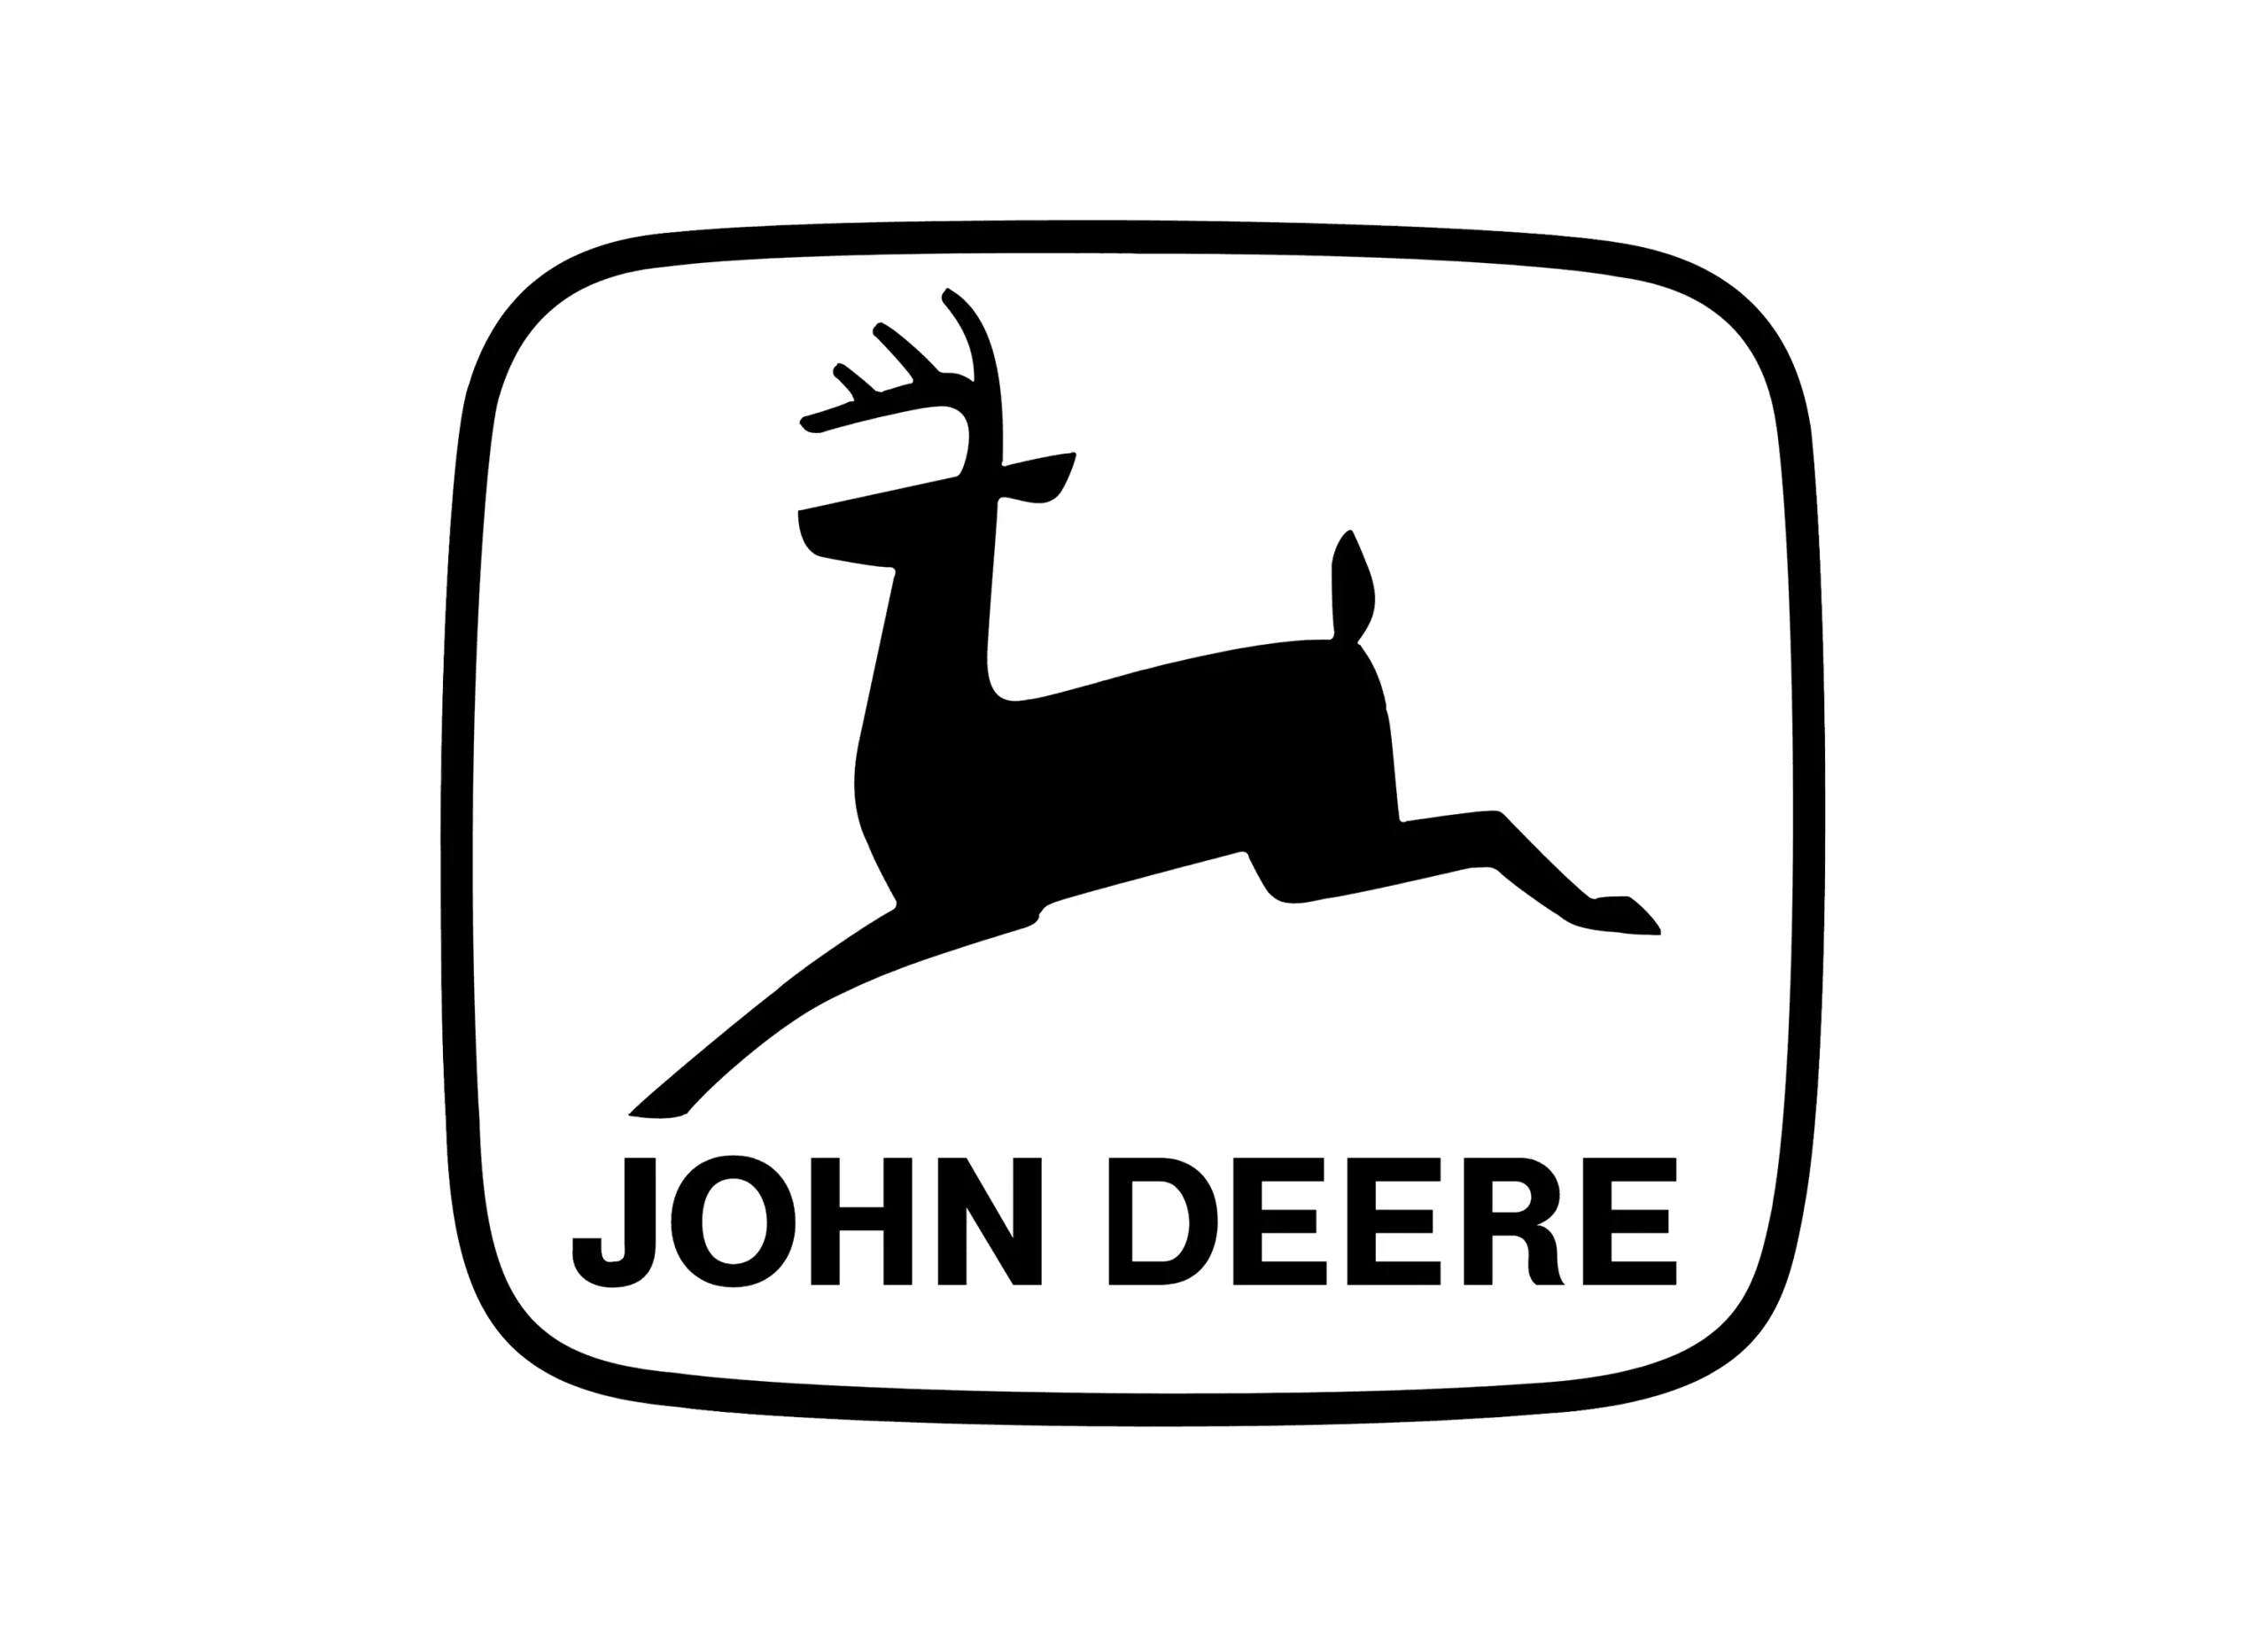 John Deere logo 1968-2000